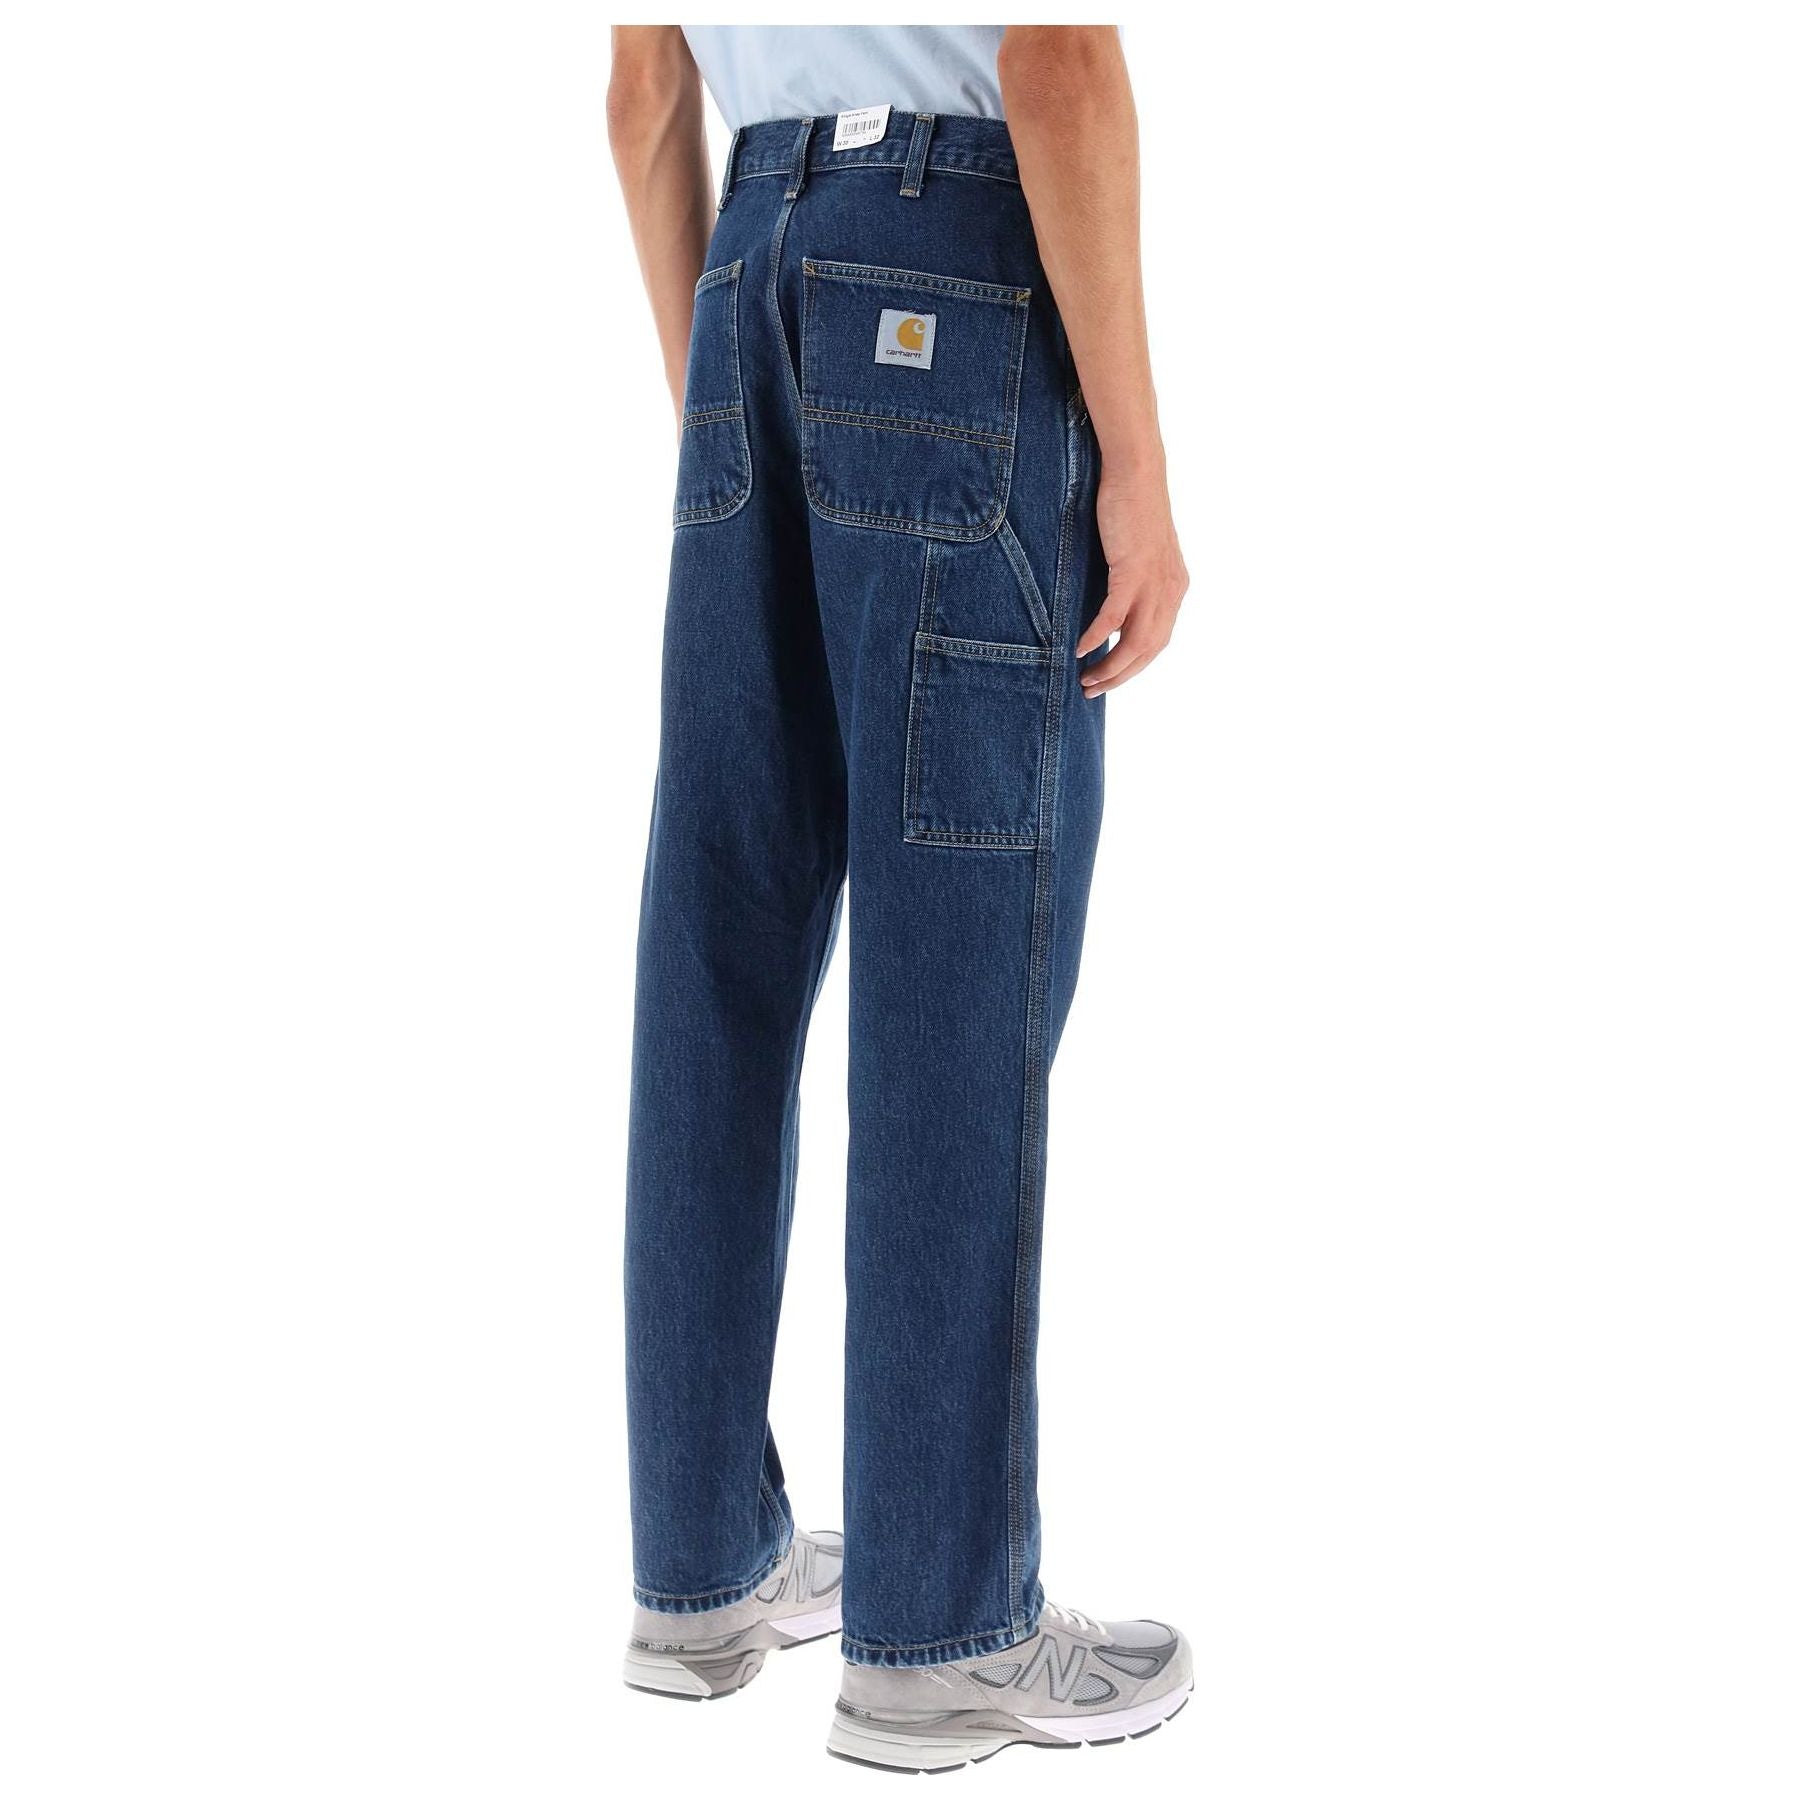 'Smith' Cargo Jeans